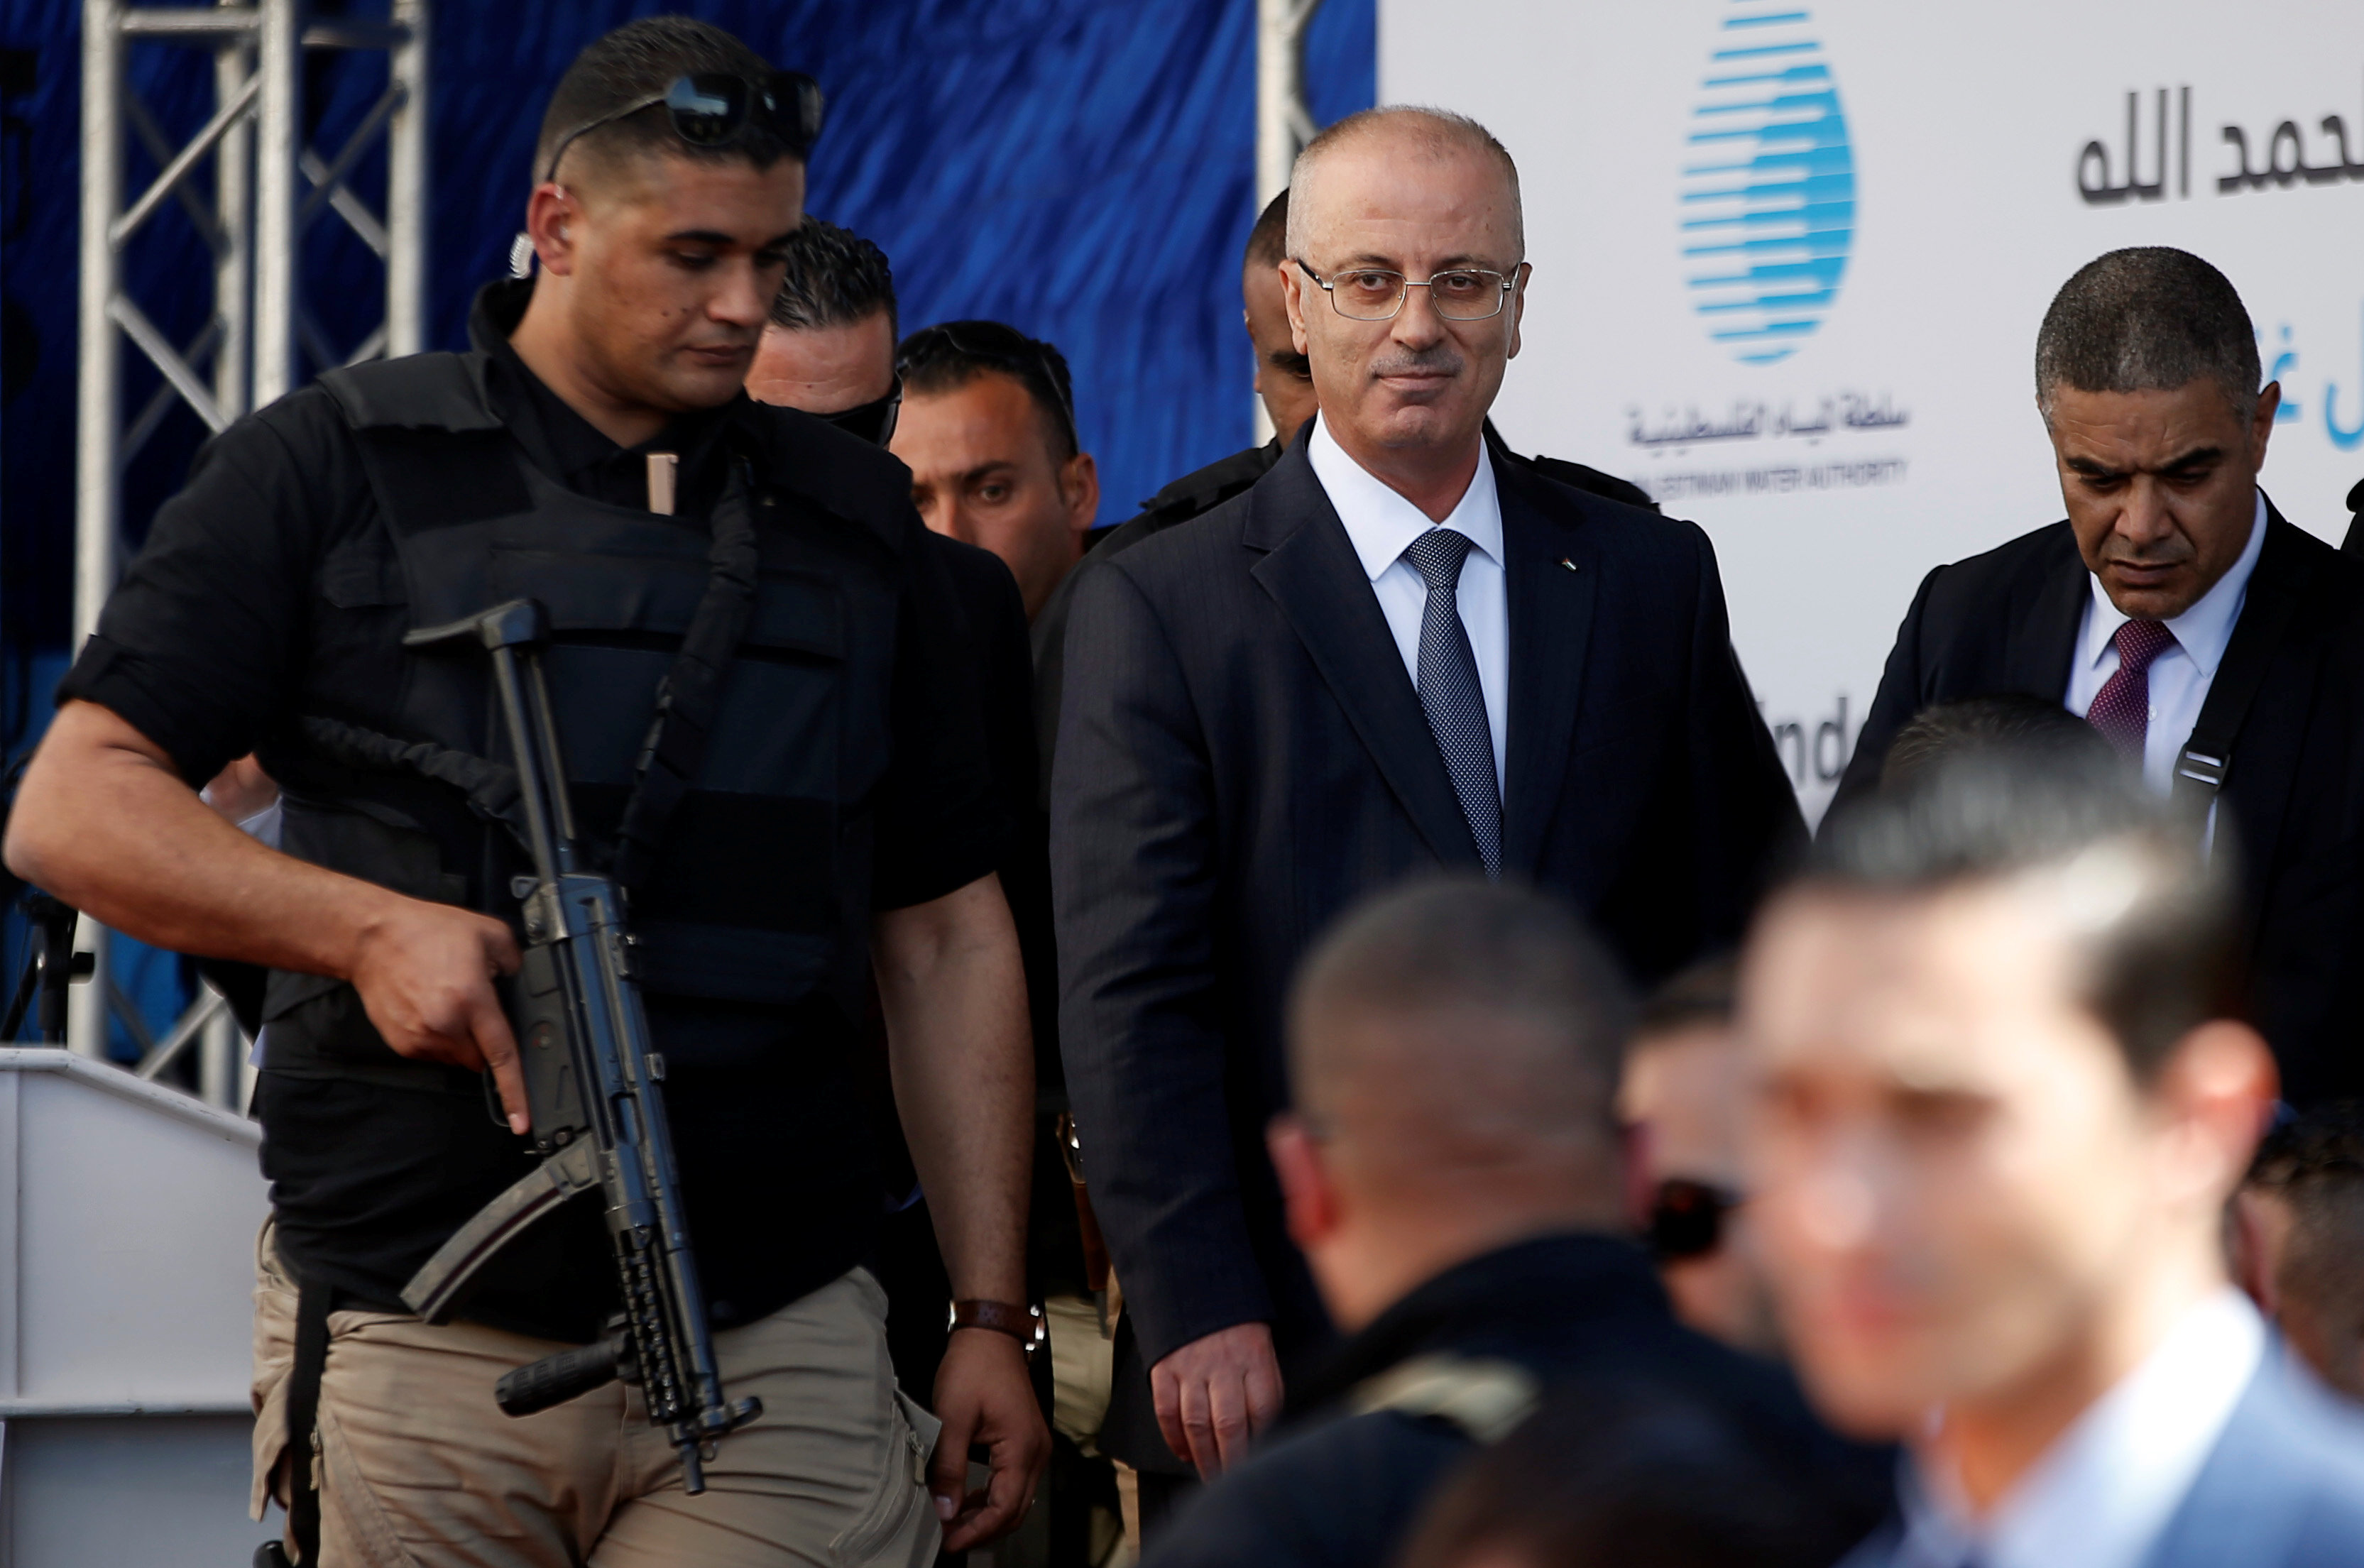 Palestinian PM survives assassination attempt